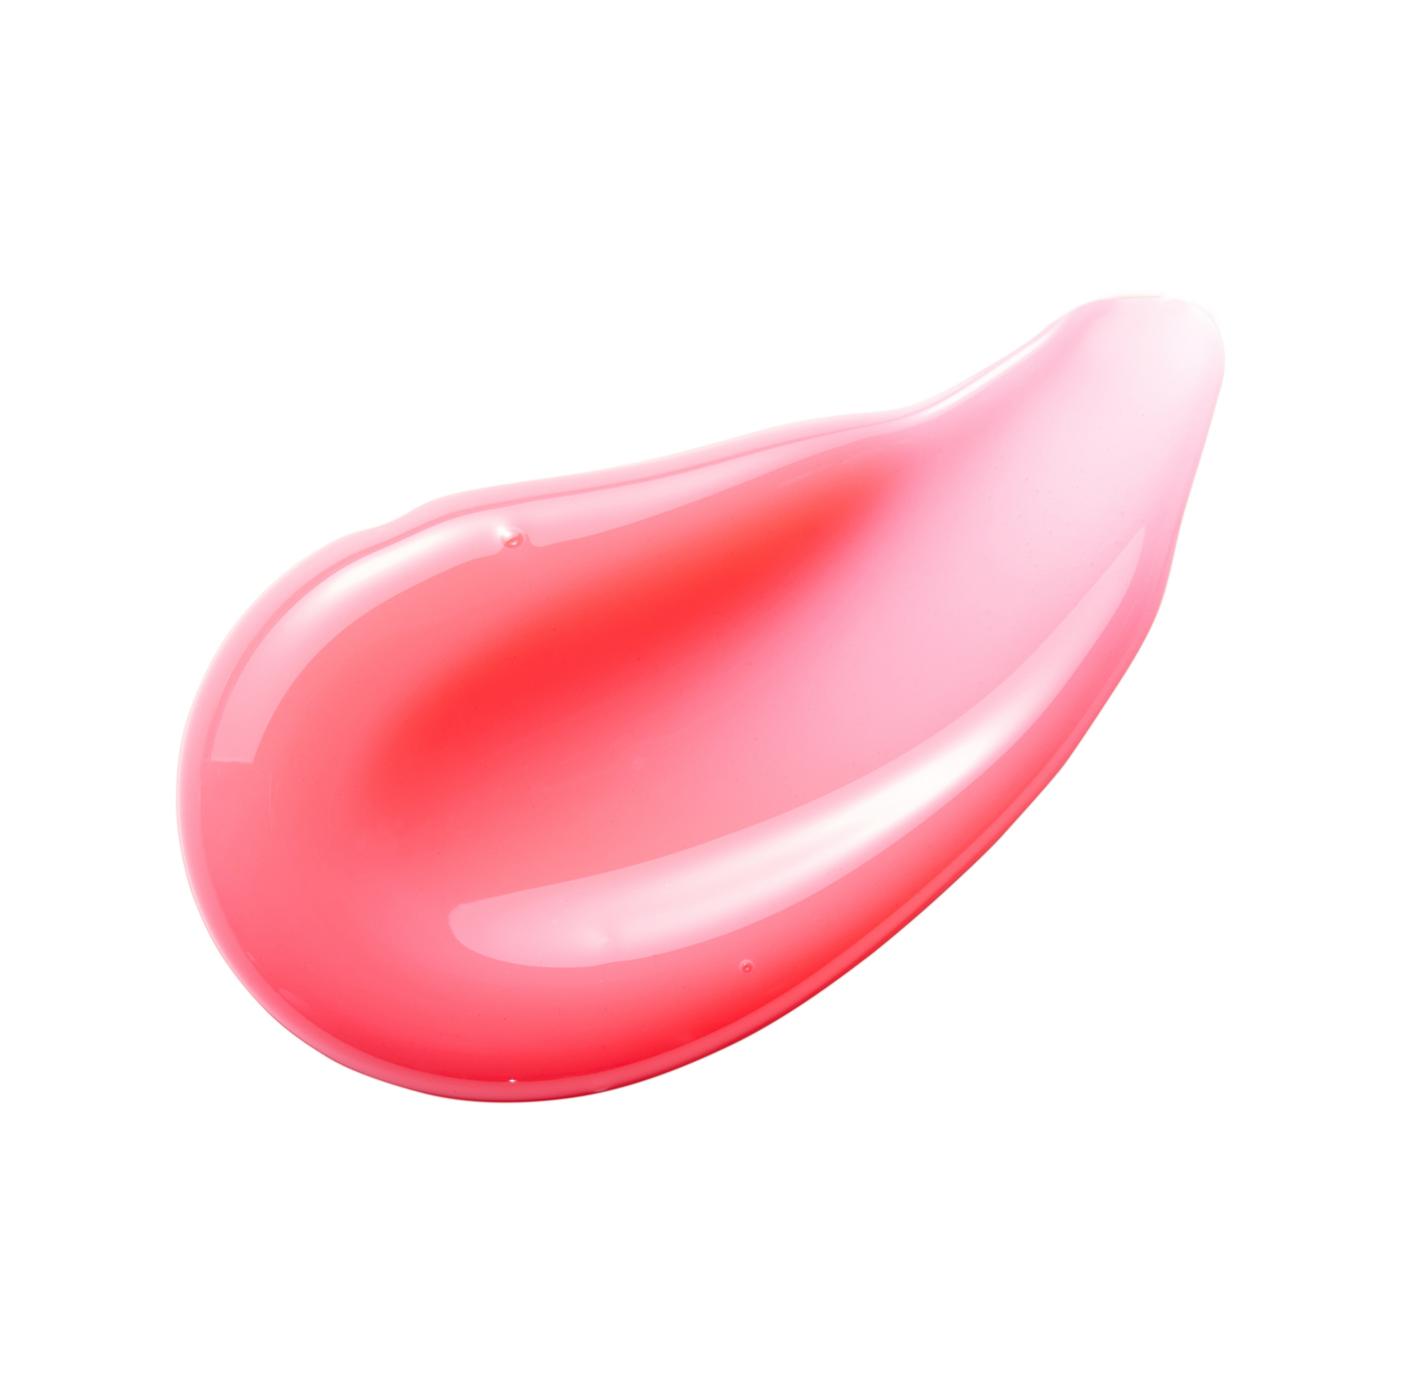 Covergirl Clean Fresh Yummy Lip Gloss - Glamingo Pink; image 2 of 9